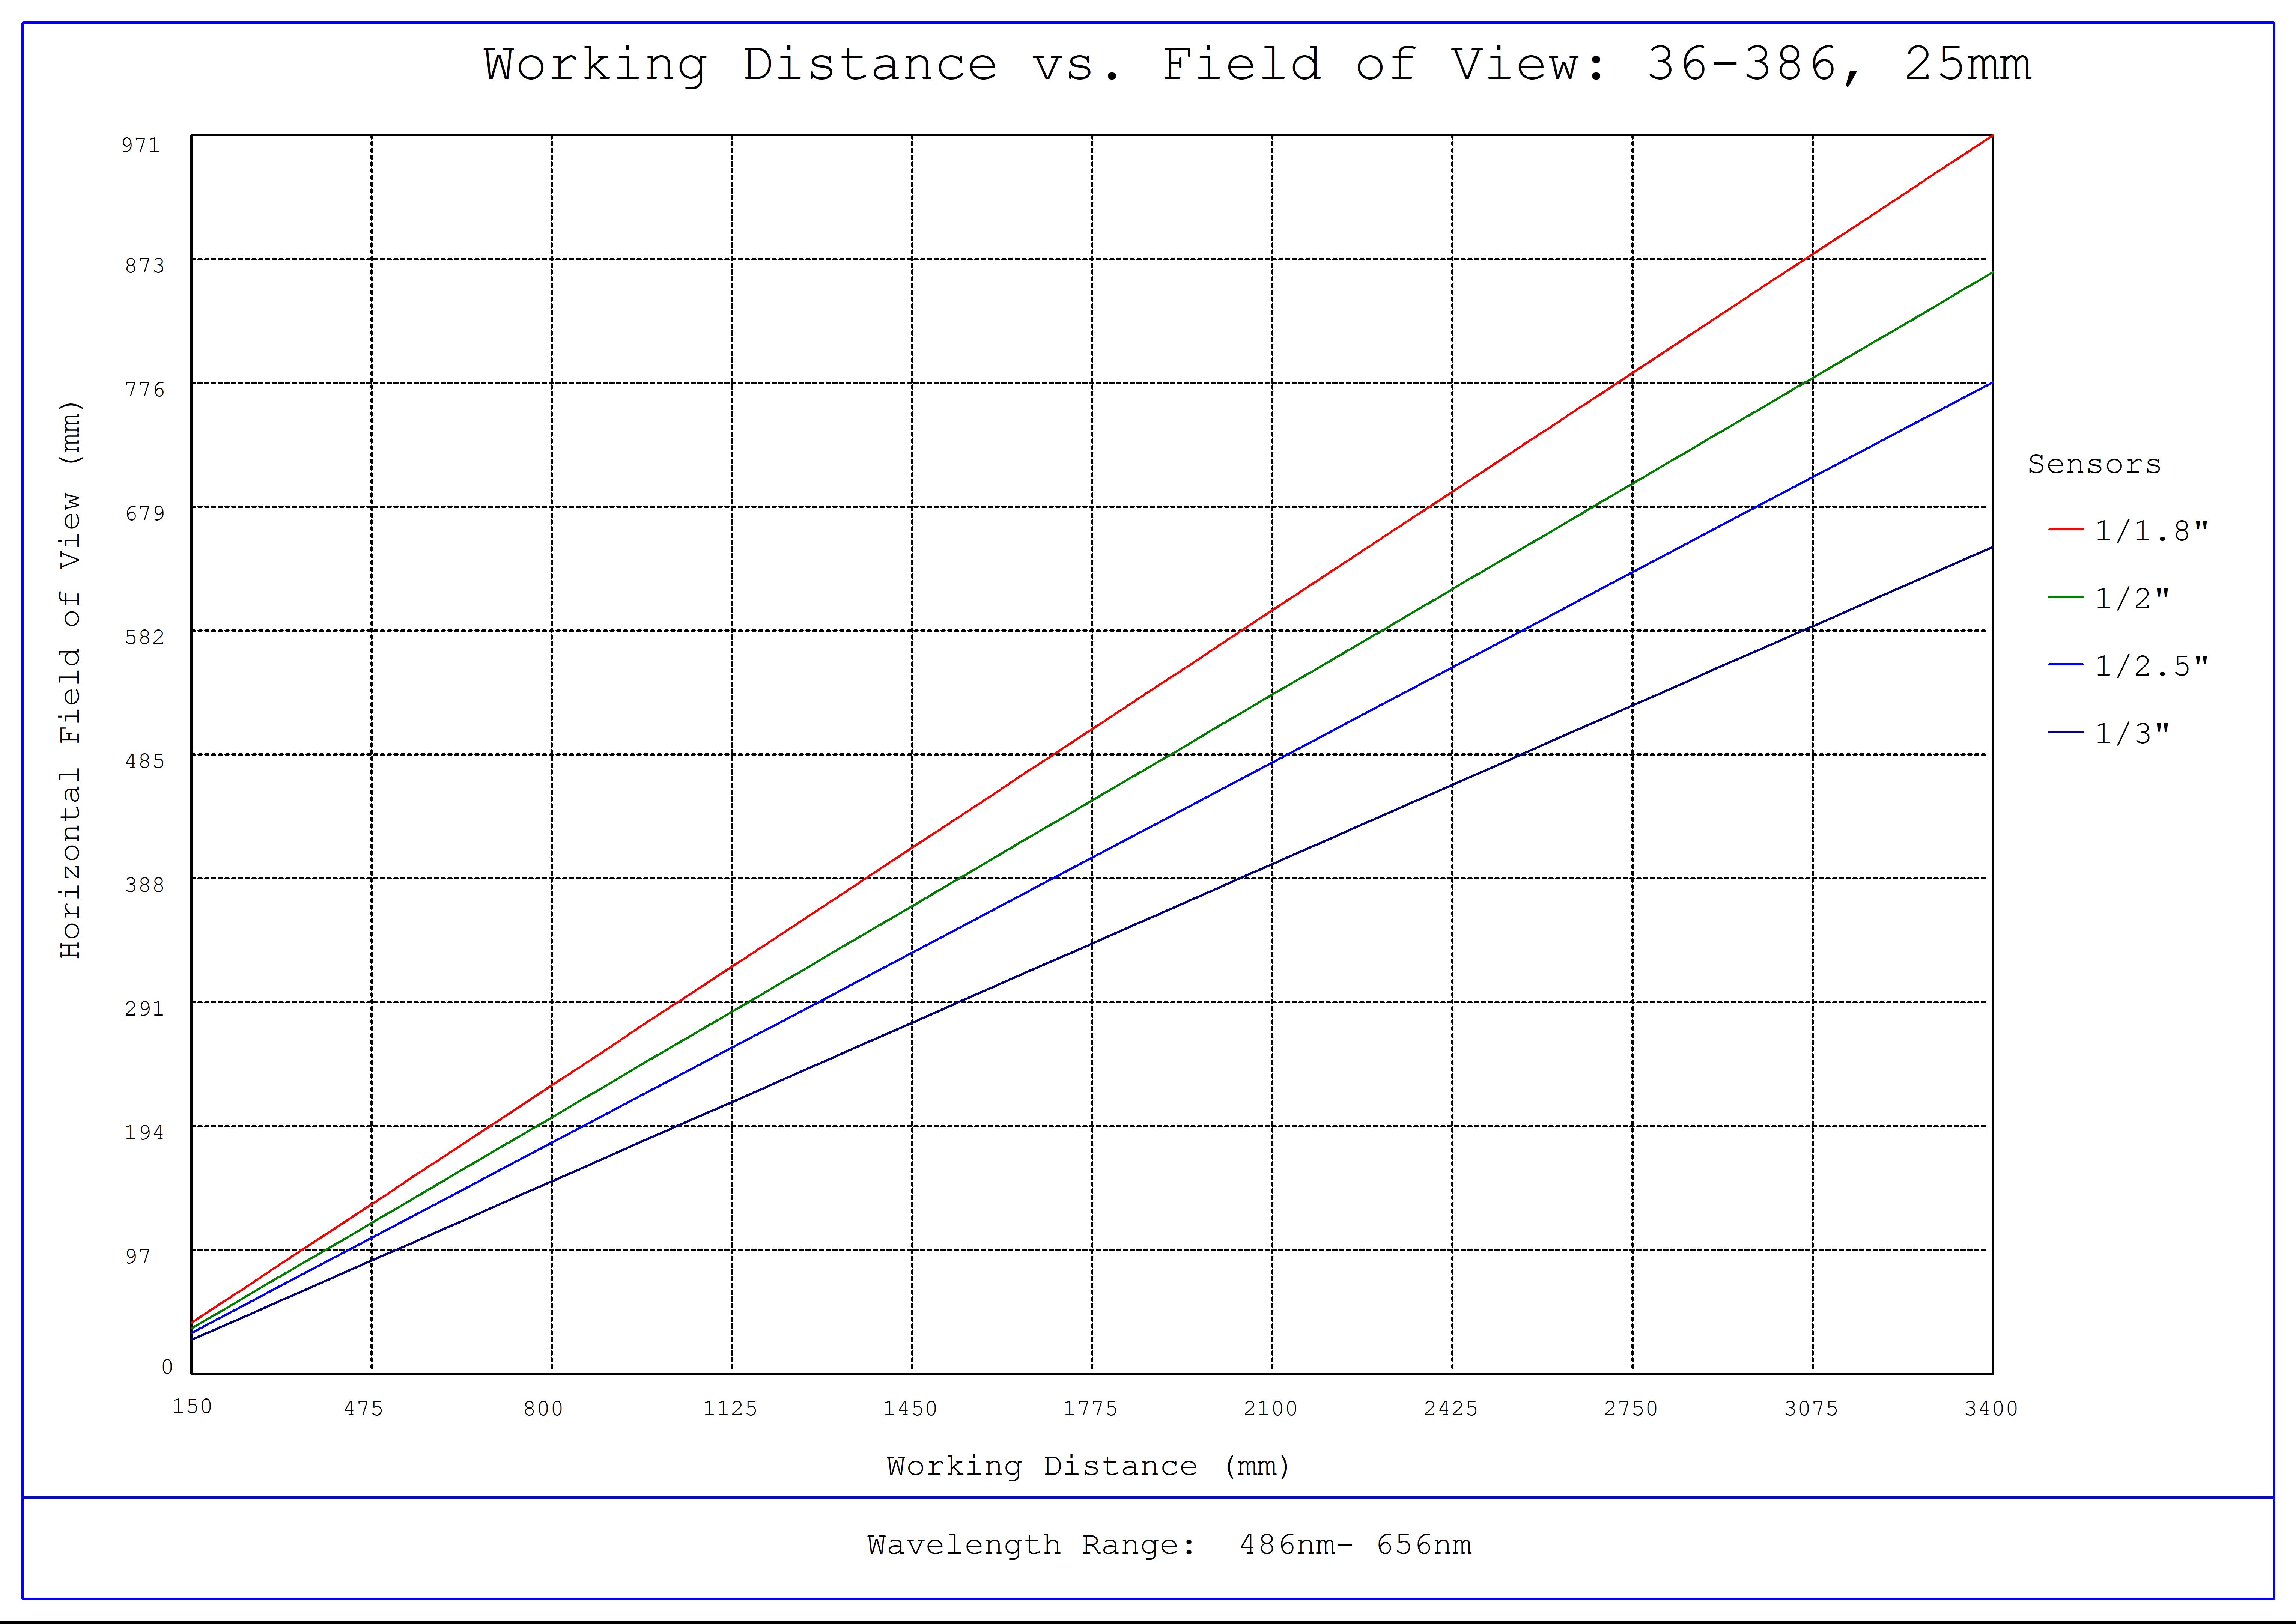 #36-386, 25mm FL f/5.6, Rugged Blue Series M12 Lens, Working Distance versus Field of View Plot